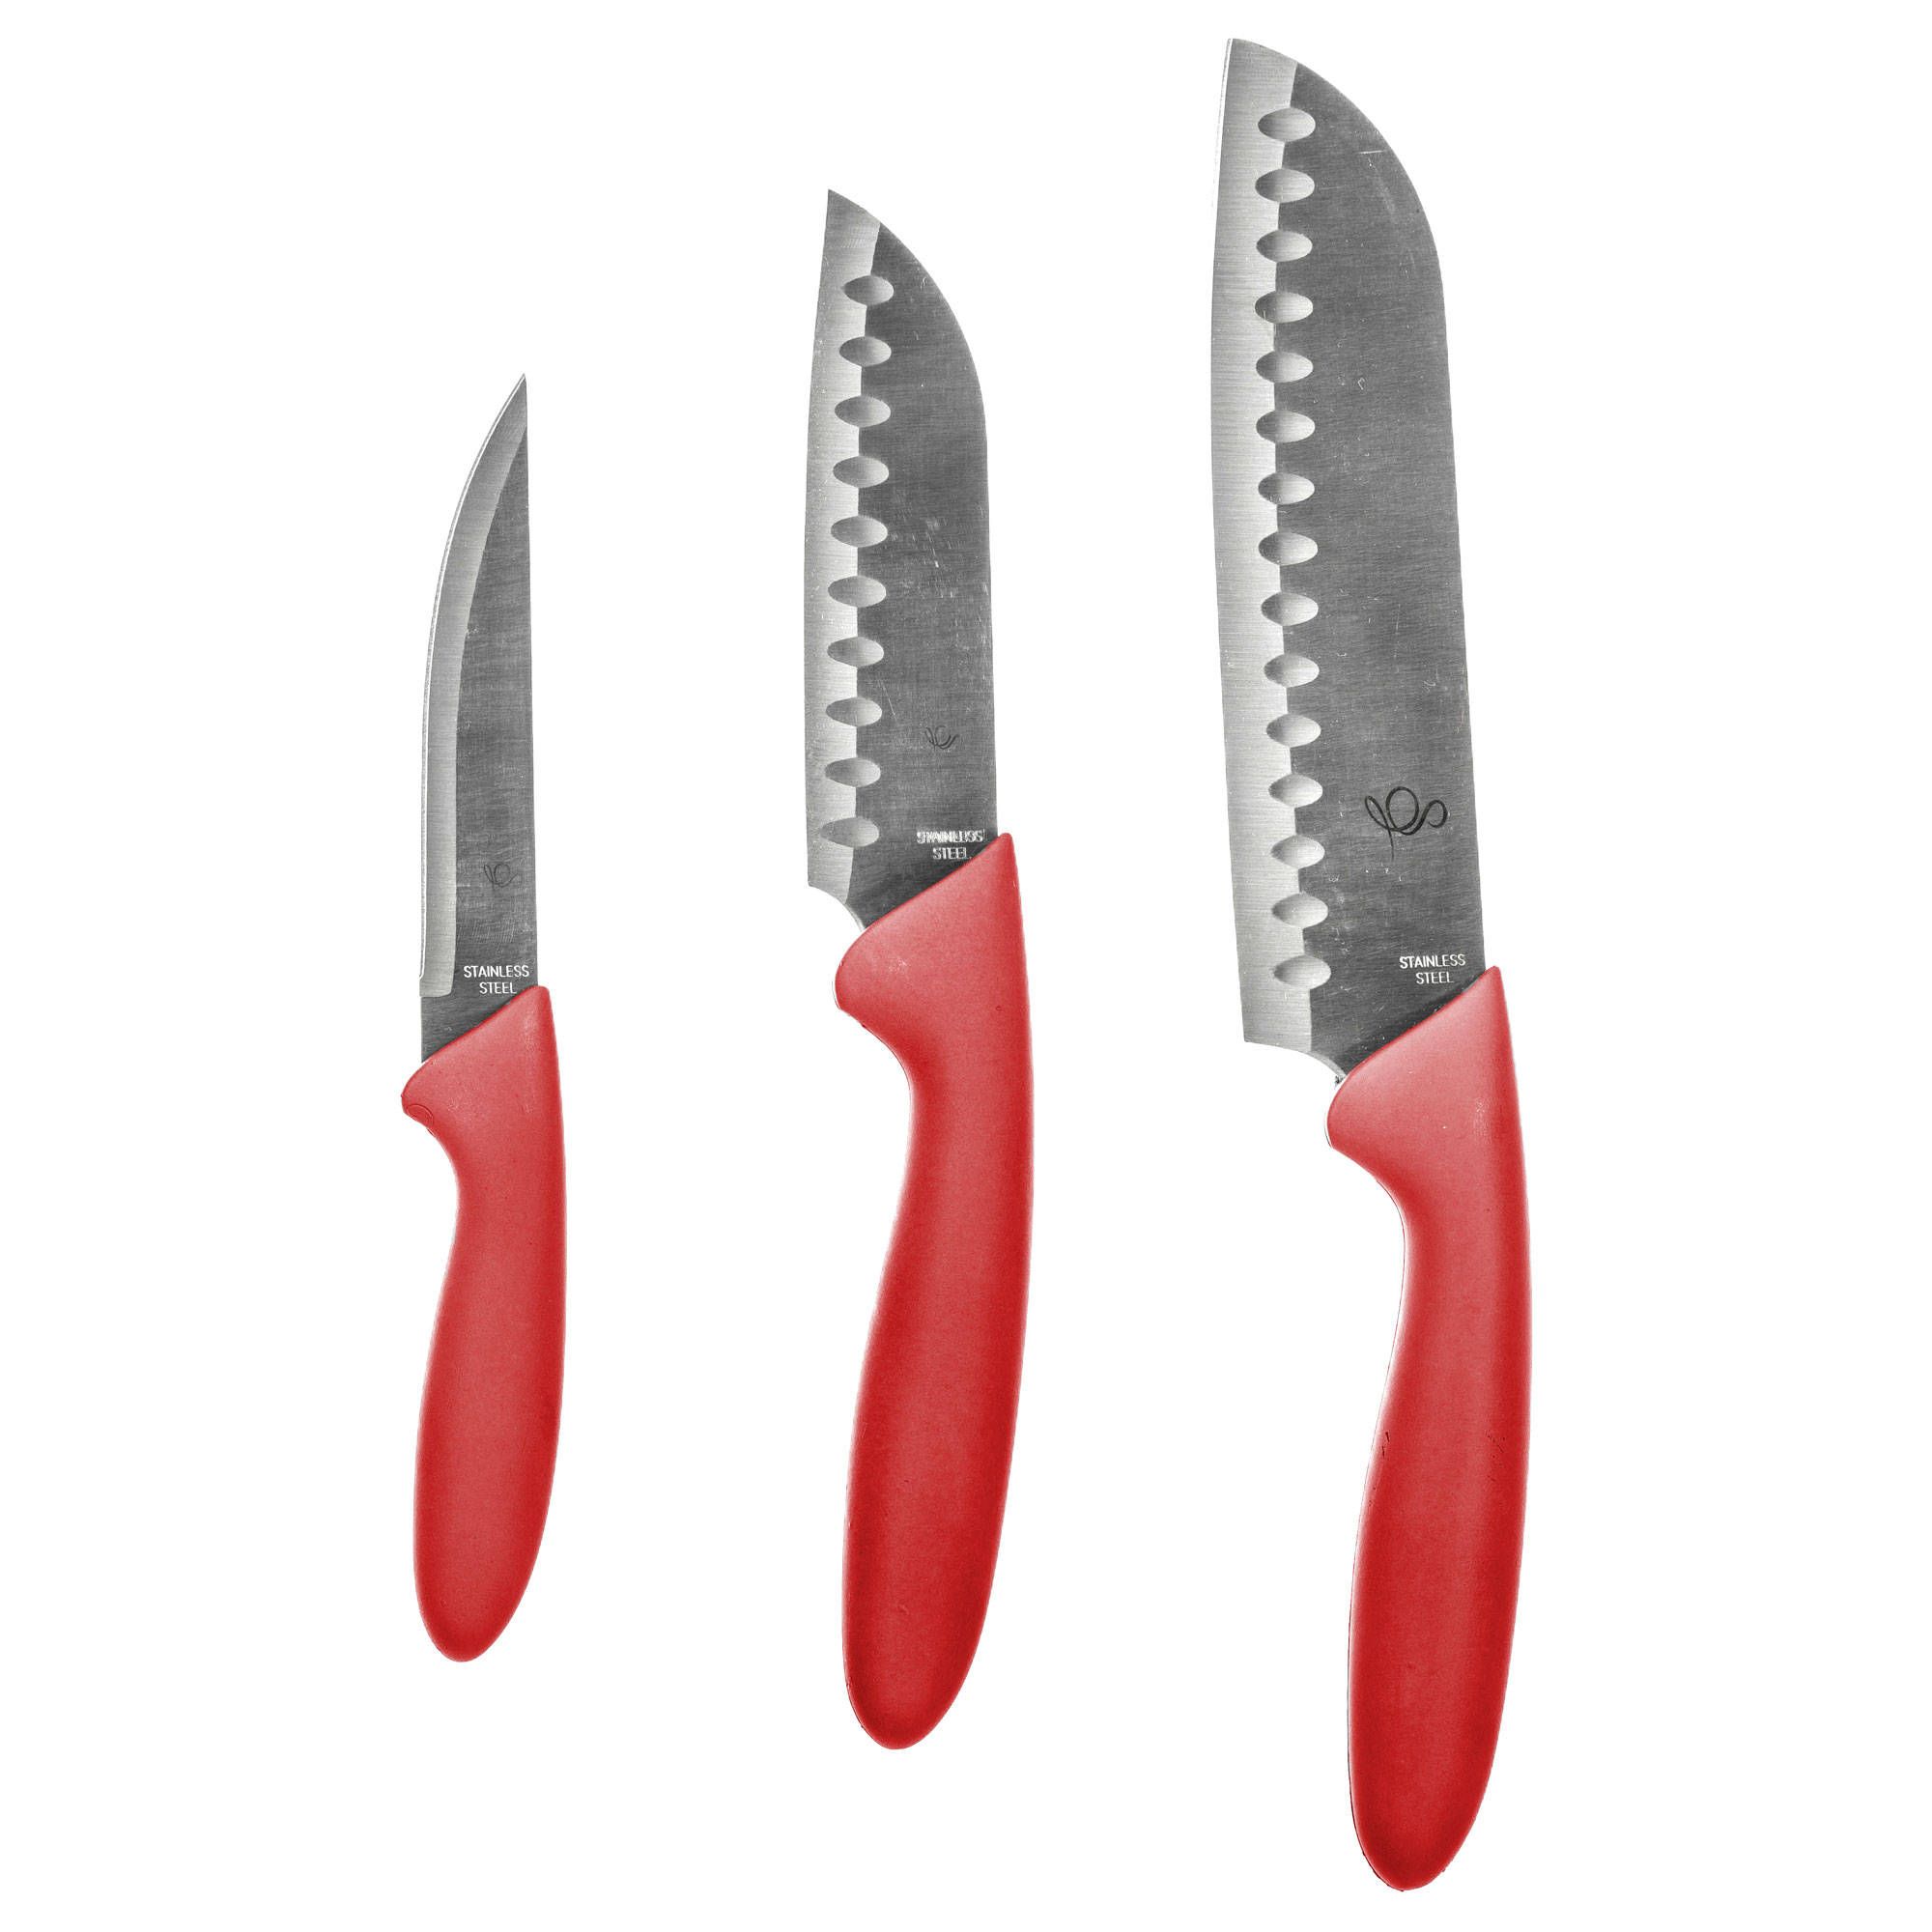 Secret de Gourmet Sada 3 kuchyňských nožů z nerezové oceli, sada 3 - EMAKO.CZ s.r.o.